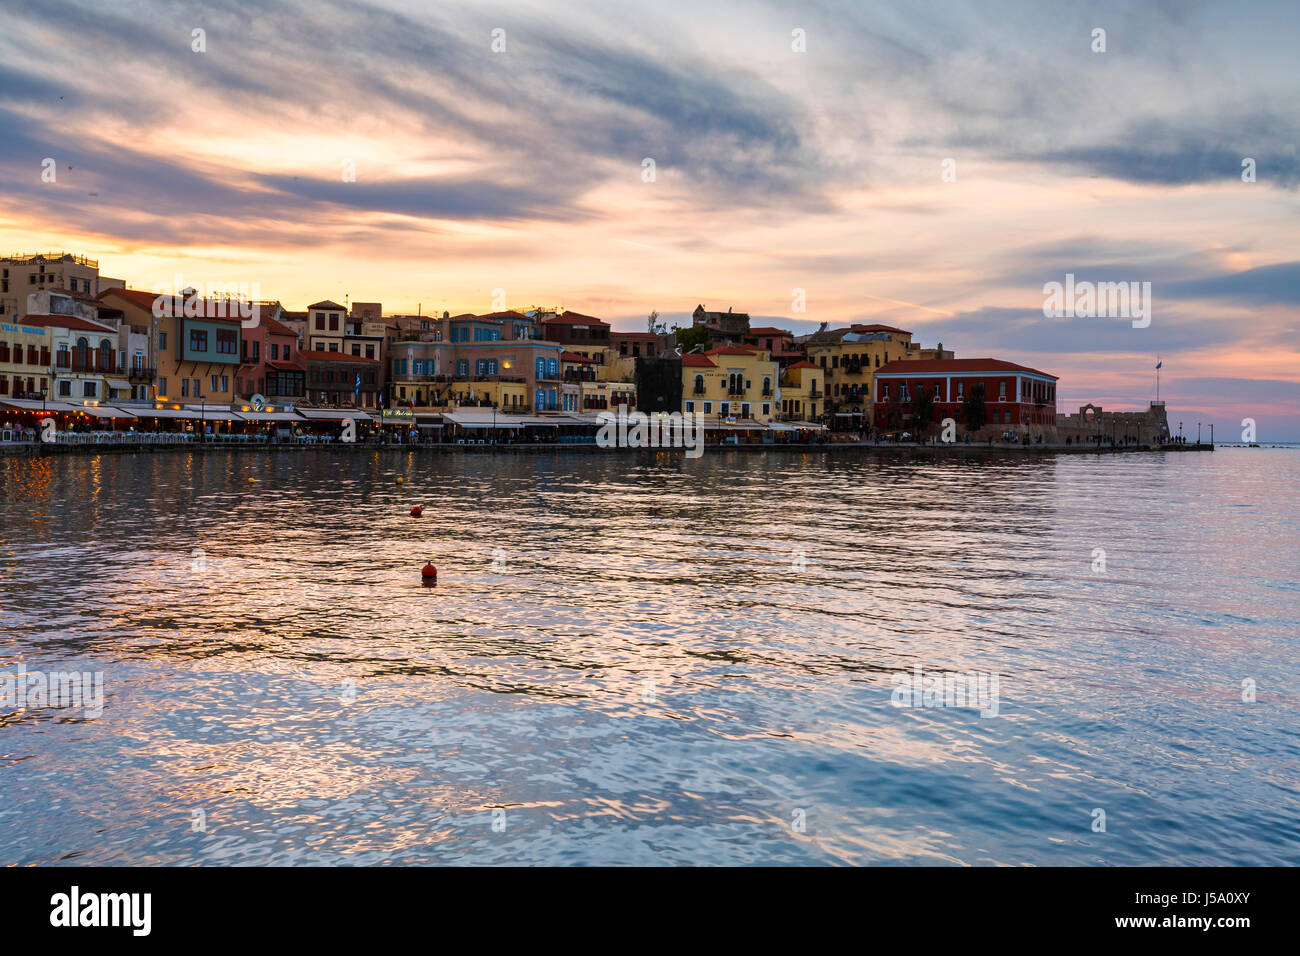 Old Venetian harbor of Chania town on Crete island, Greece. Stock Photo